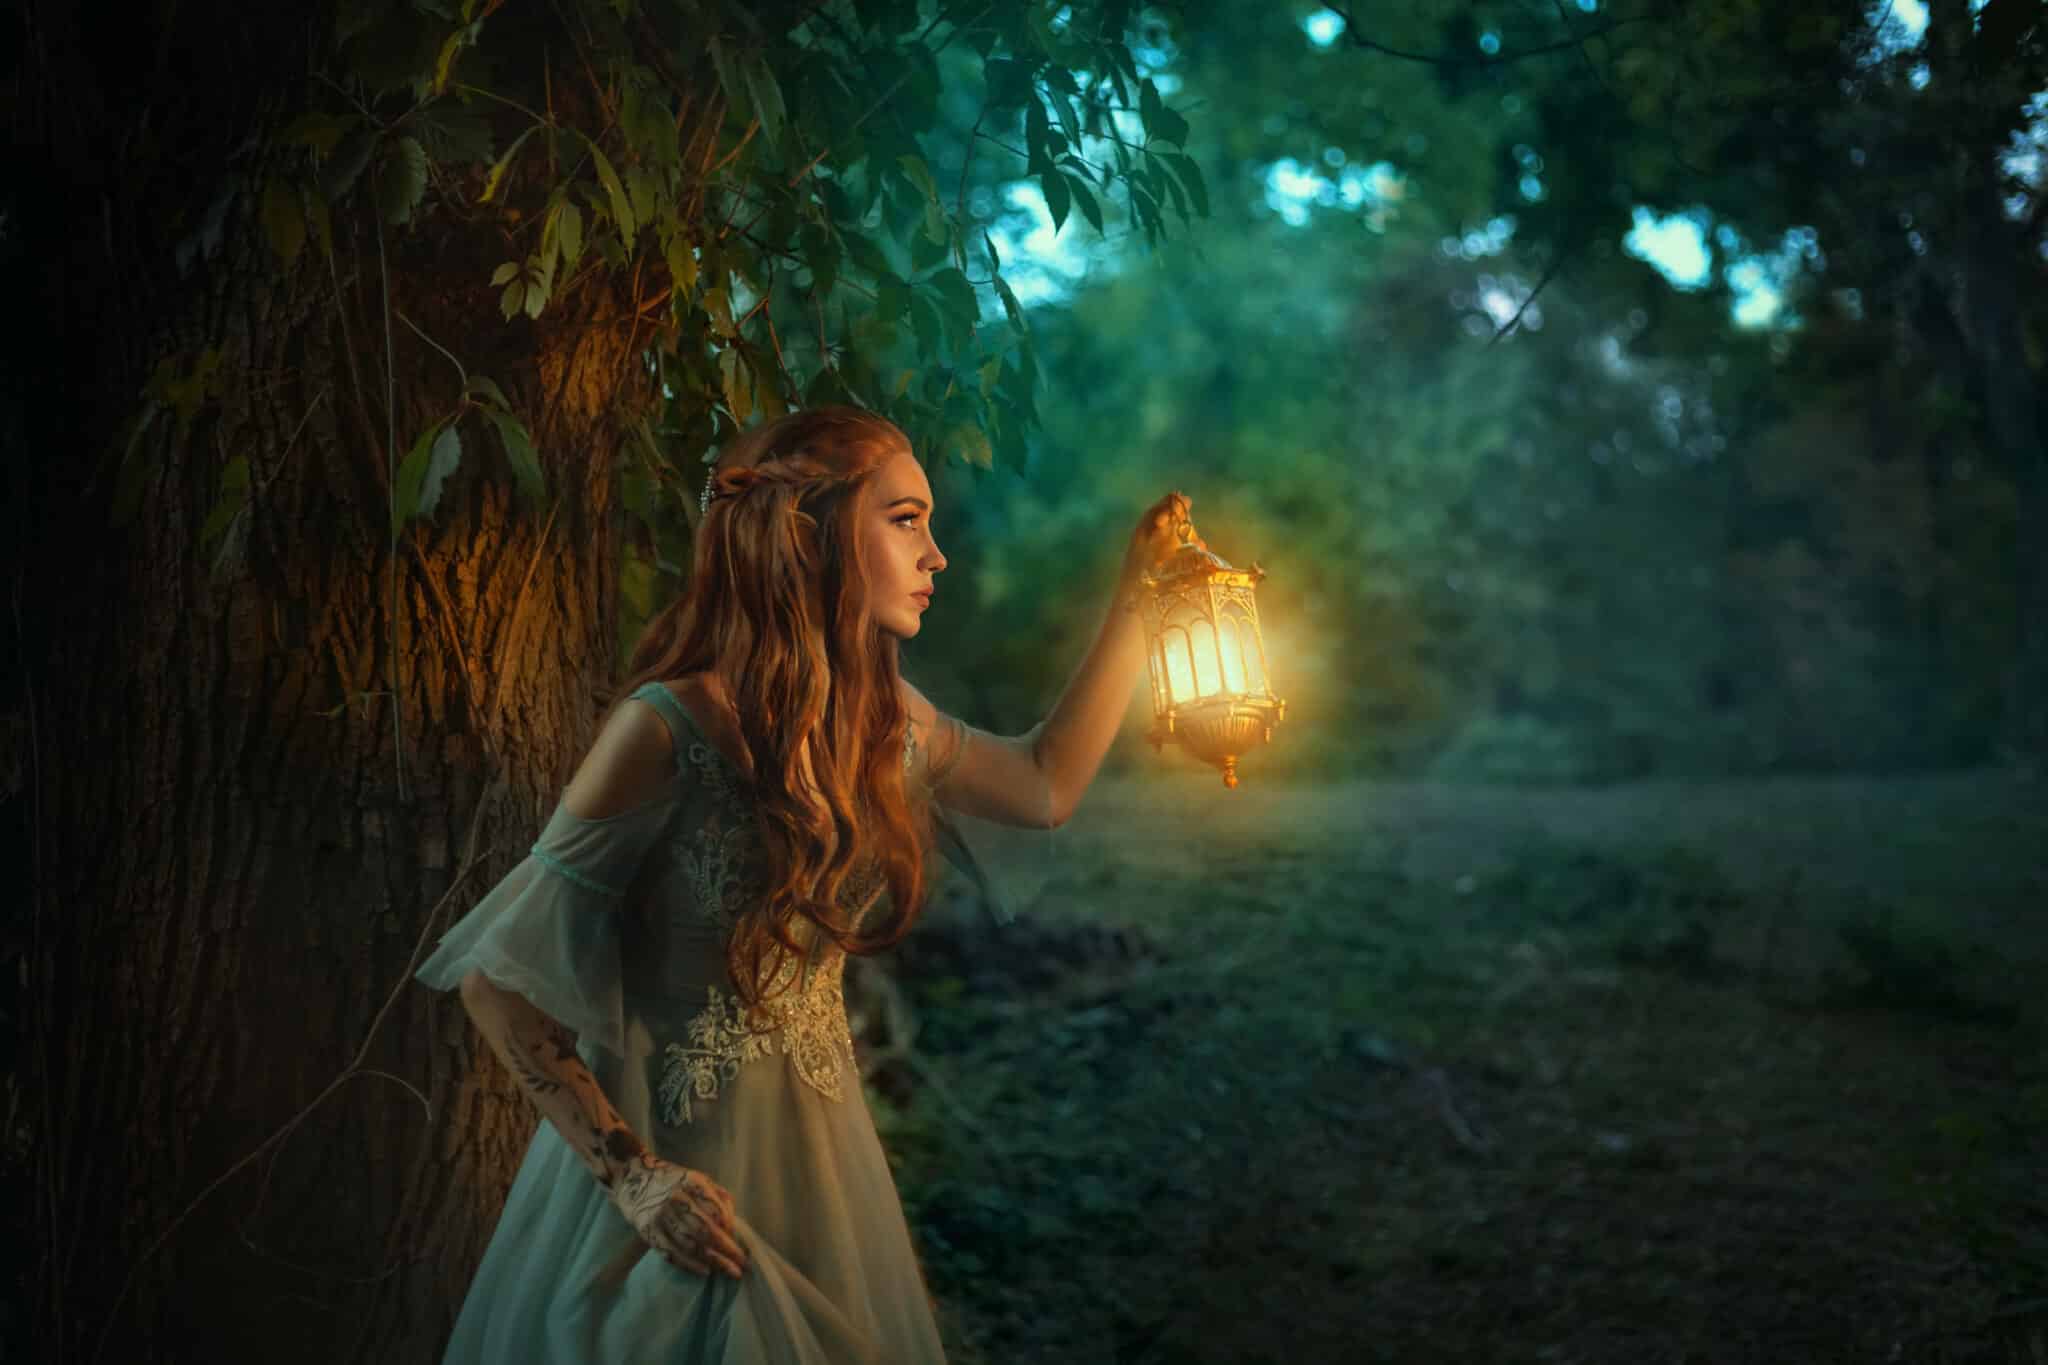 Fantasy elf princess woman walks in dark night forest, holding glowing lantern in hands